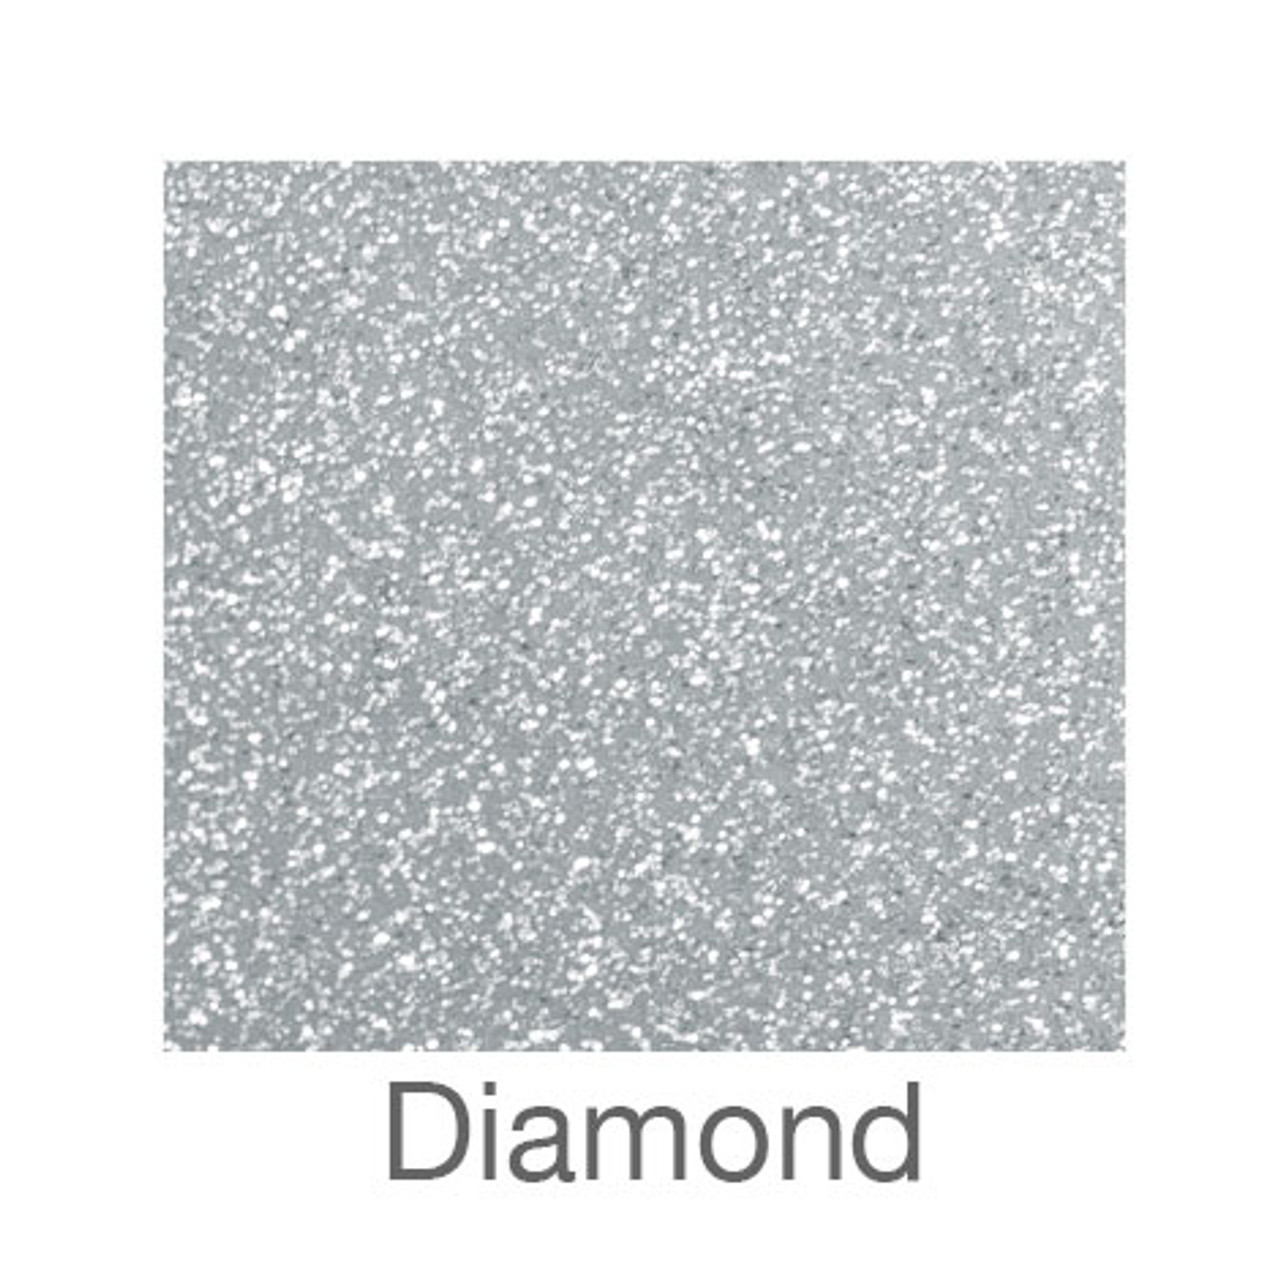 Diamond - Glitter Adhesive - 12 x 12 